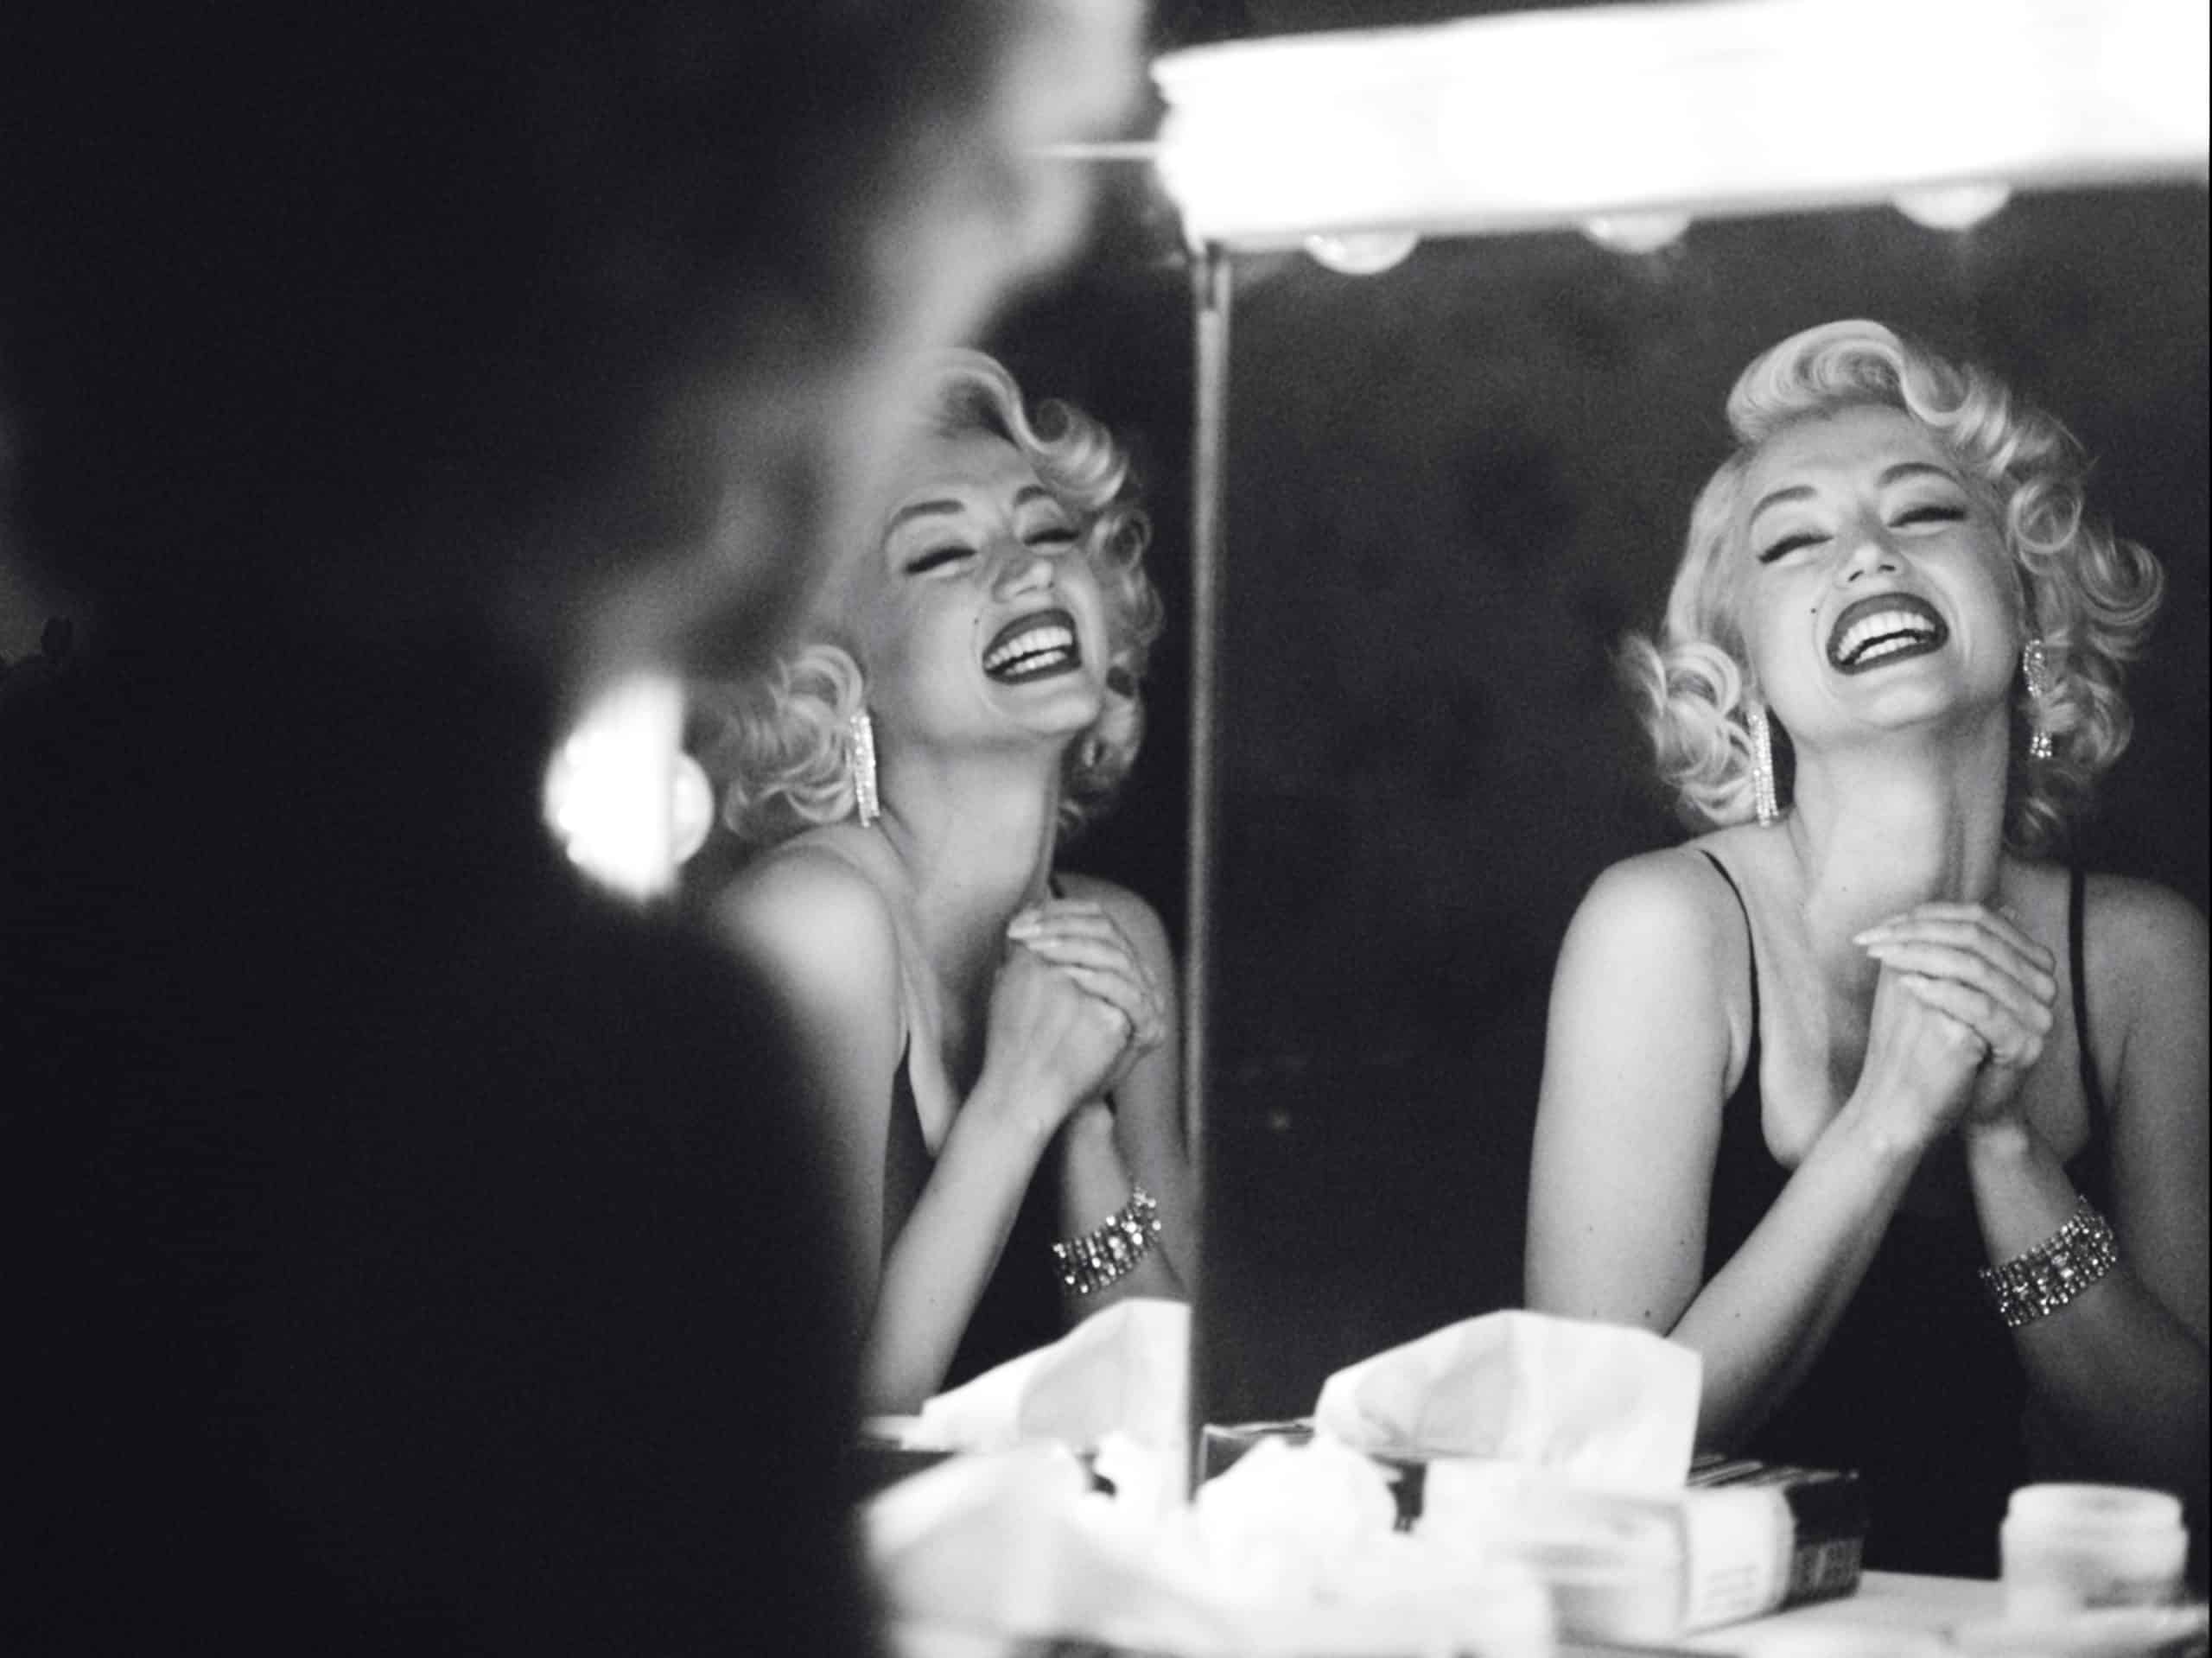 BLONDE, Ana de Armas, as Marilyn Monroe, 2022